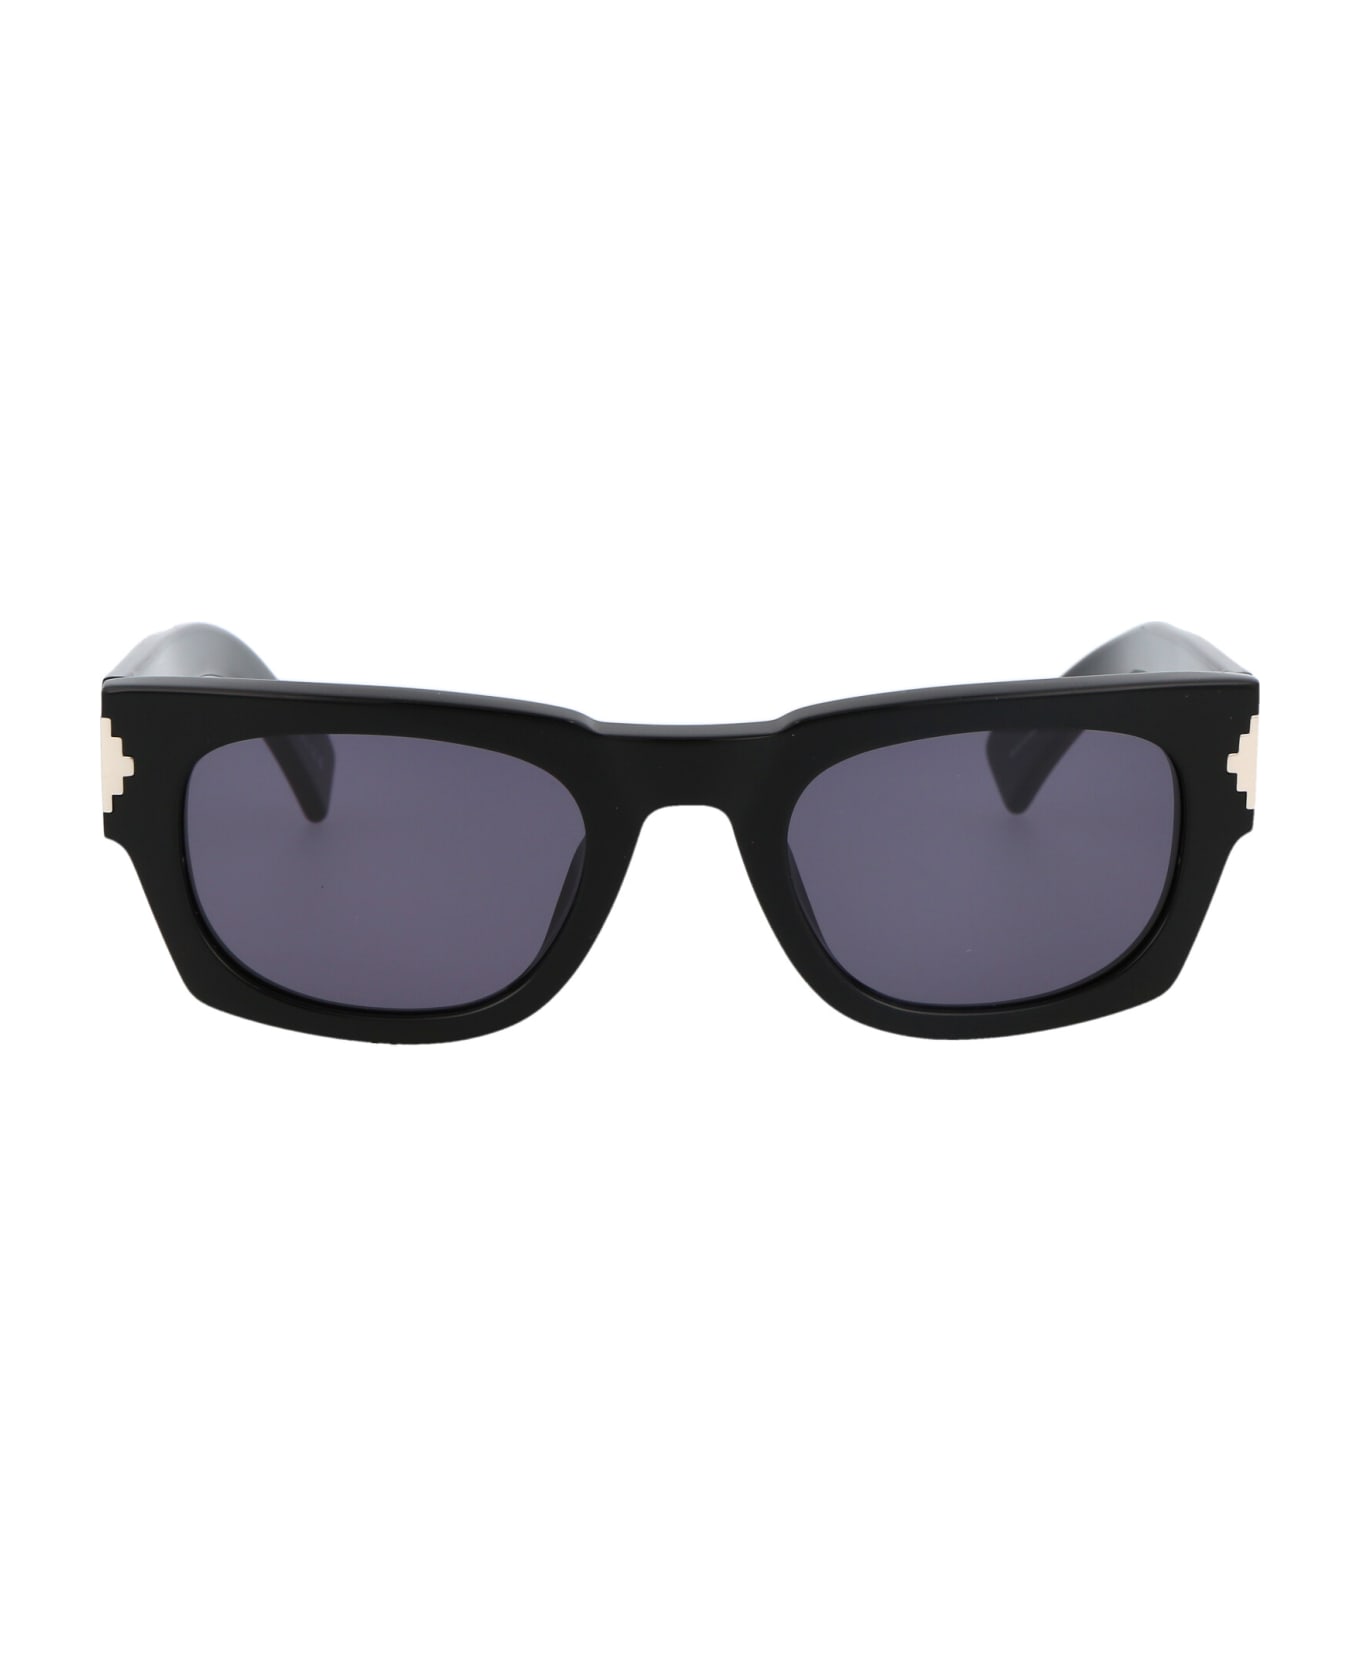 Marcelo Burlon Calafate Sunglasses - 1007 BLACK DARK GREY